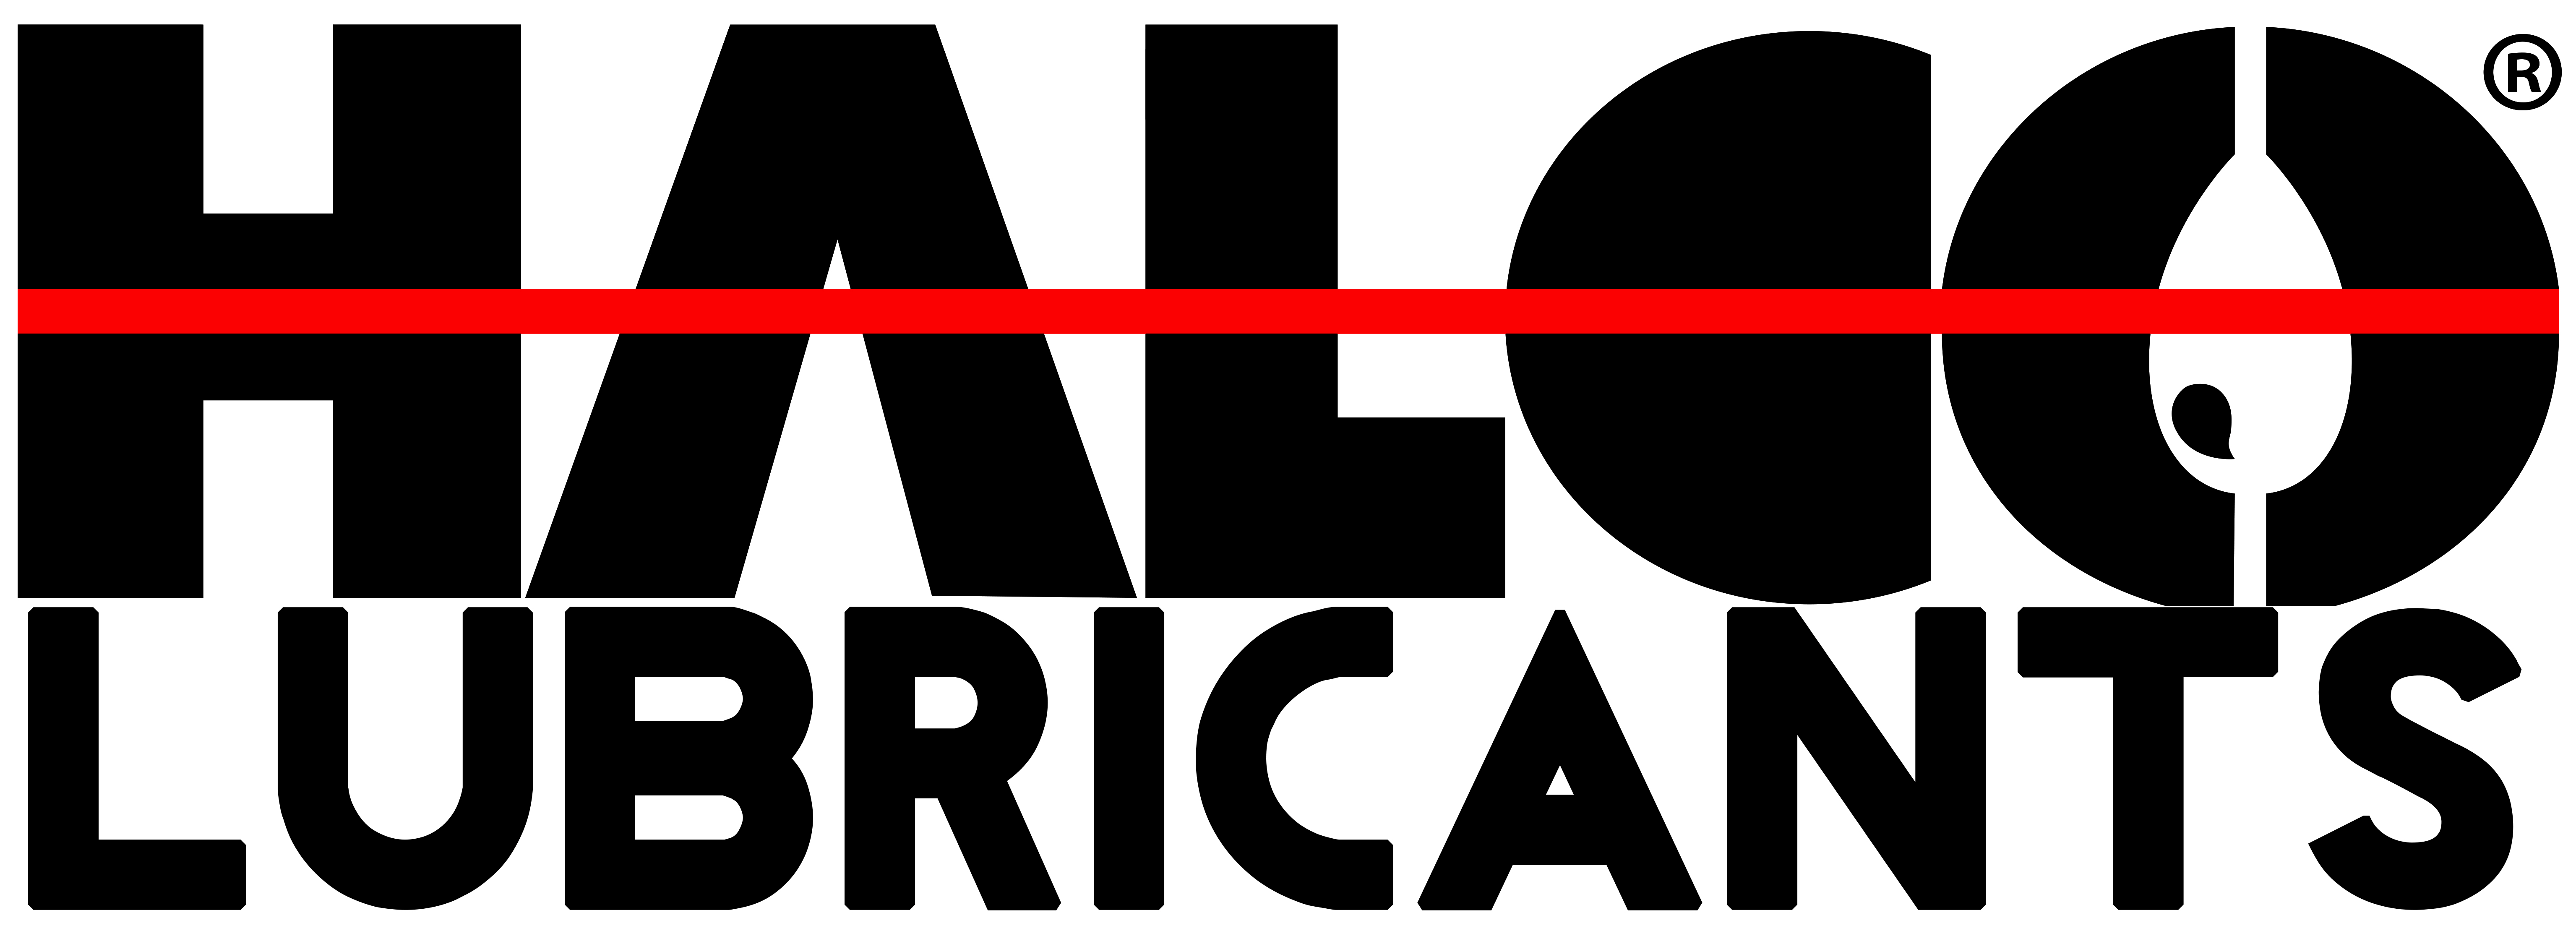 Halco Lubricants® logo